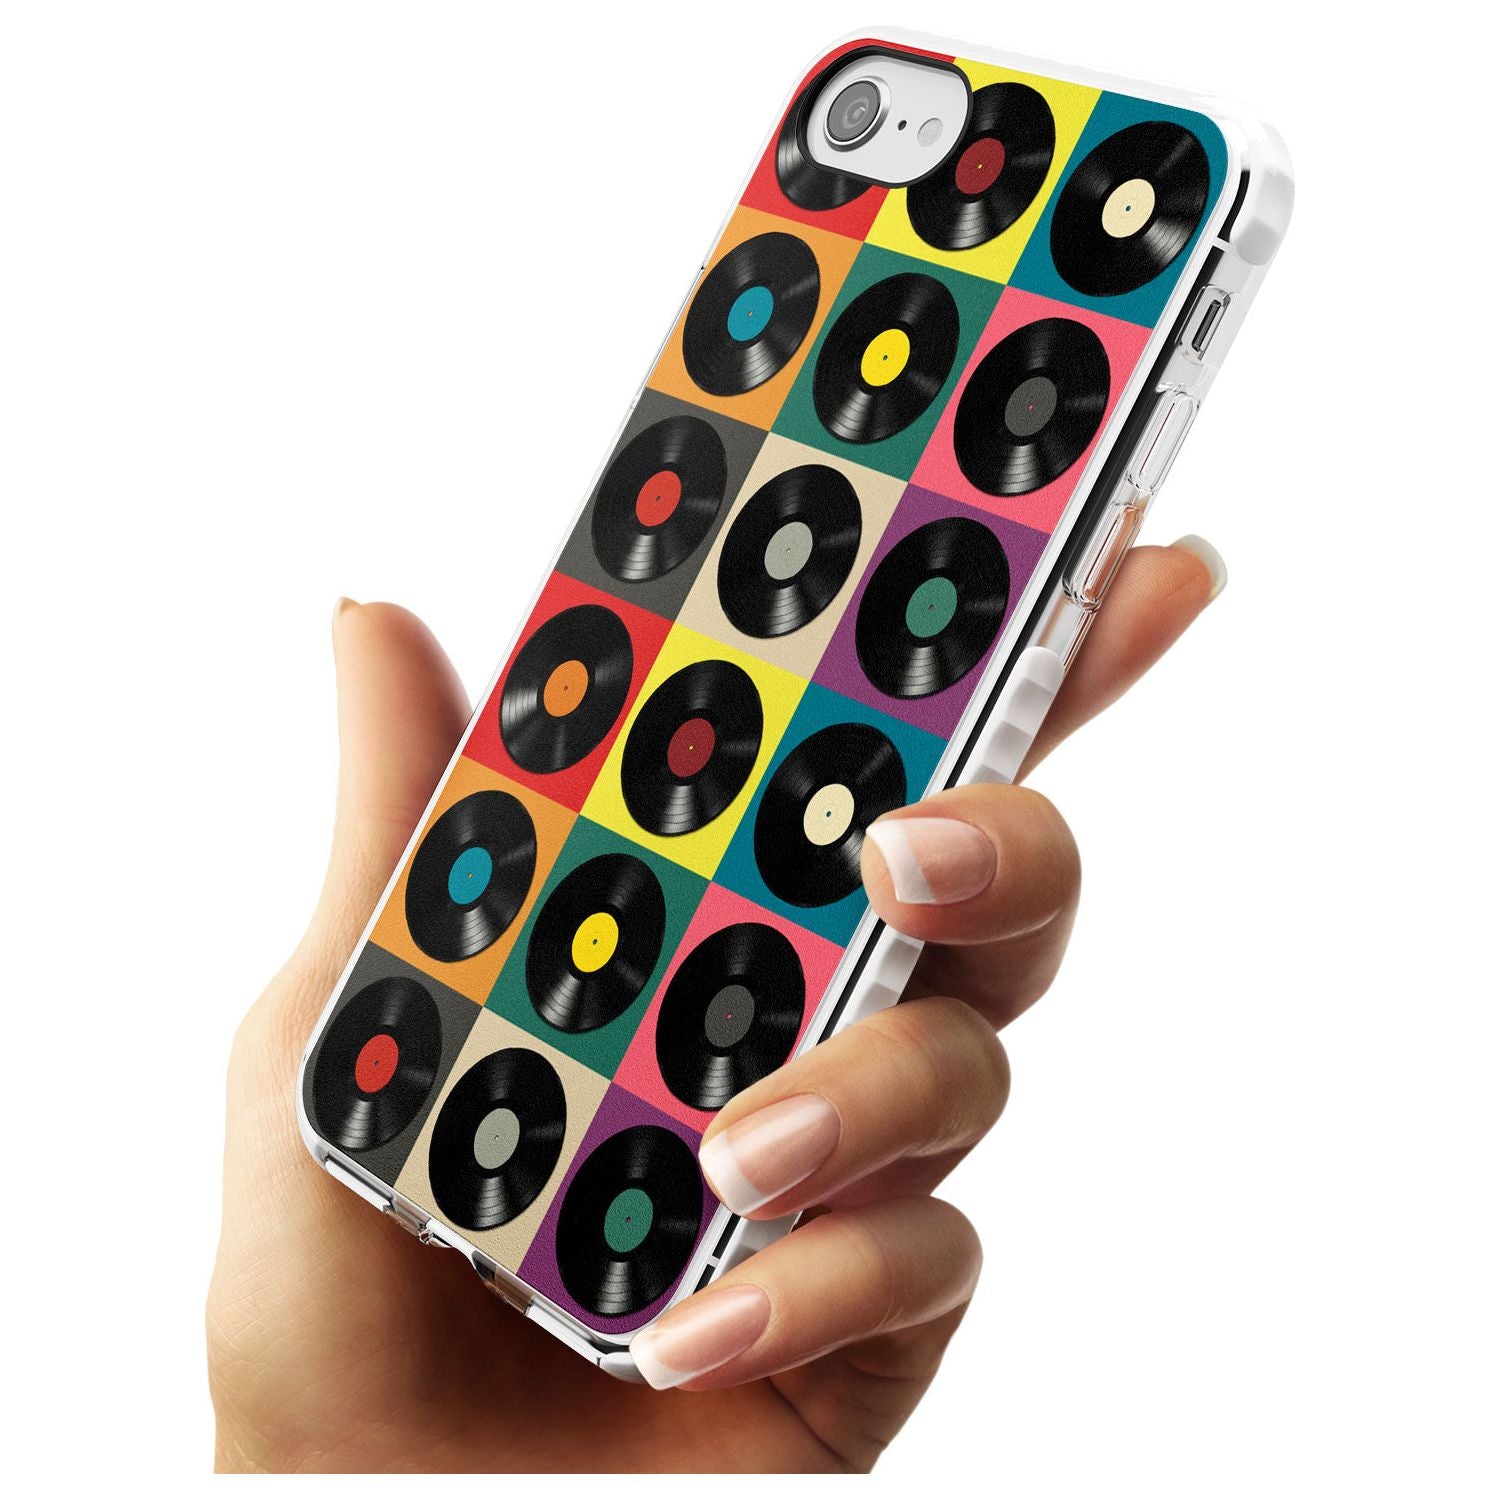 Vinyl Record Pattern Impact Phone Case for iPhone SE 8 7 Plus